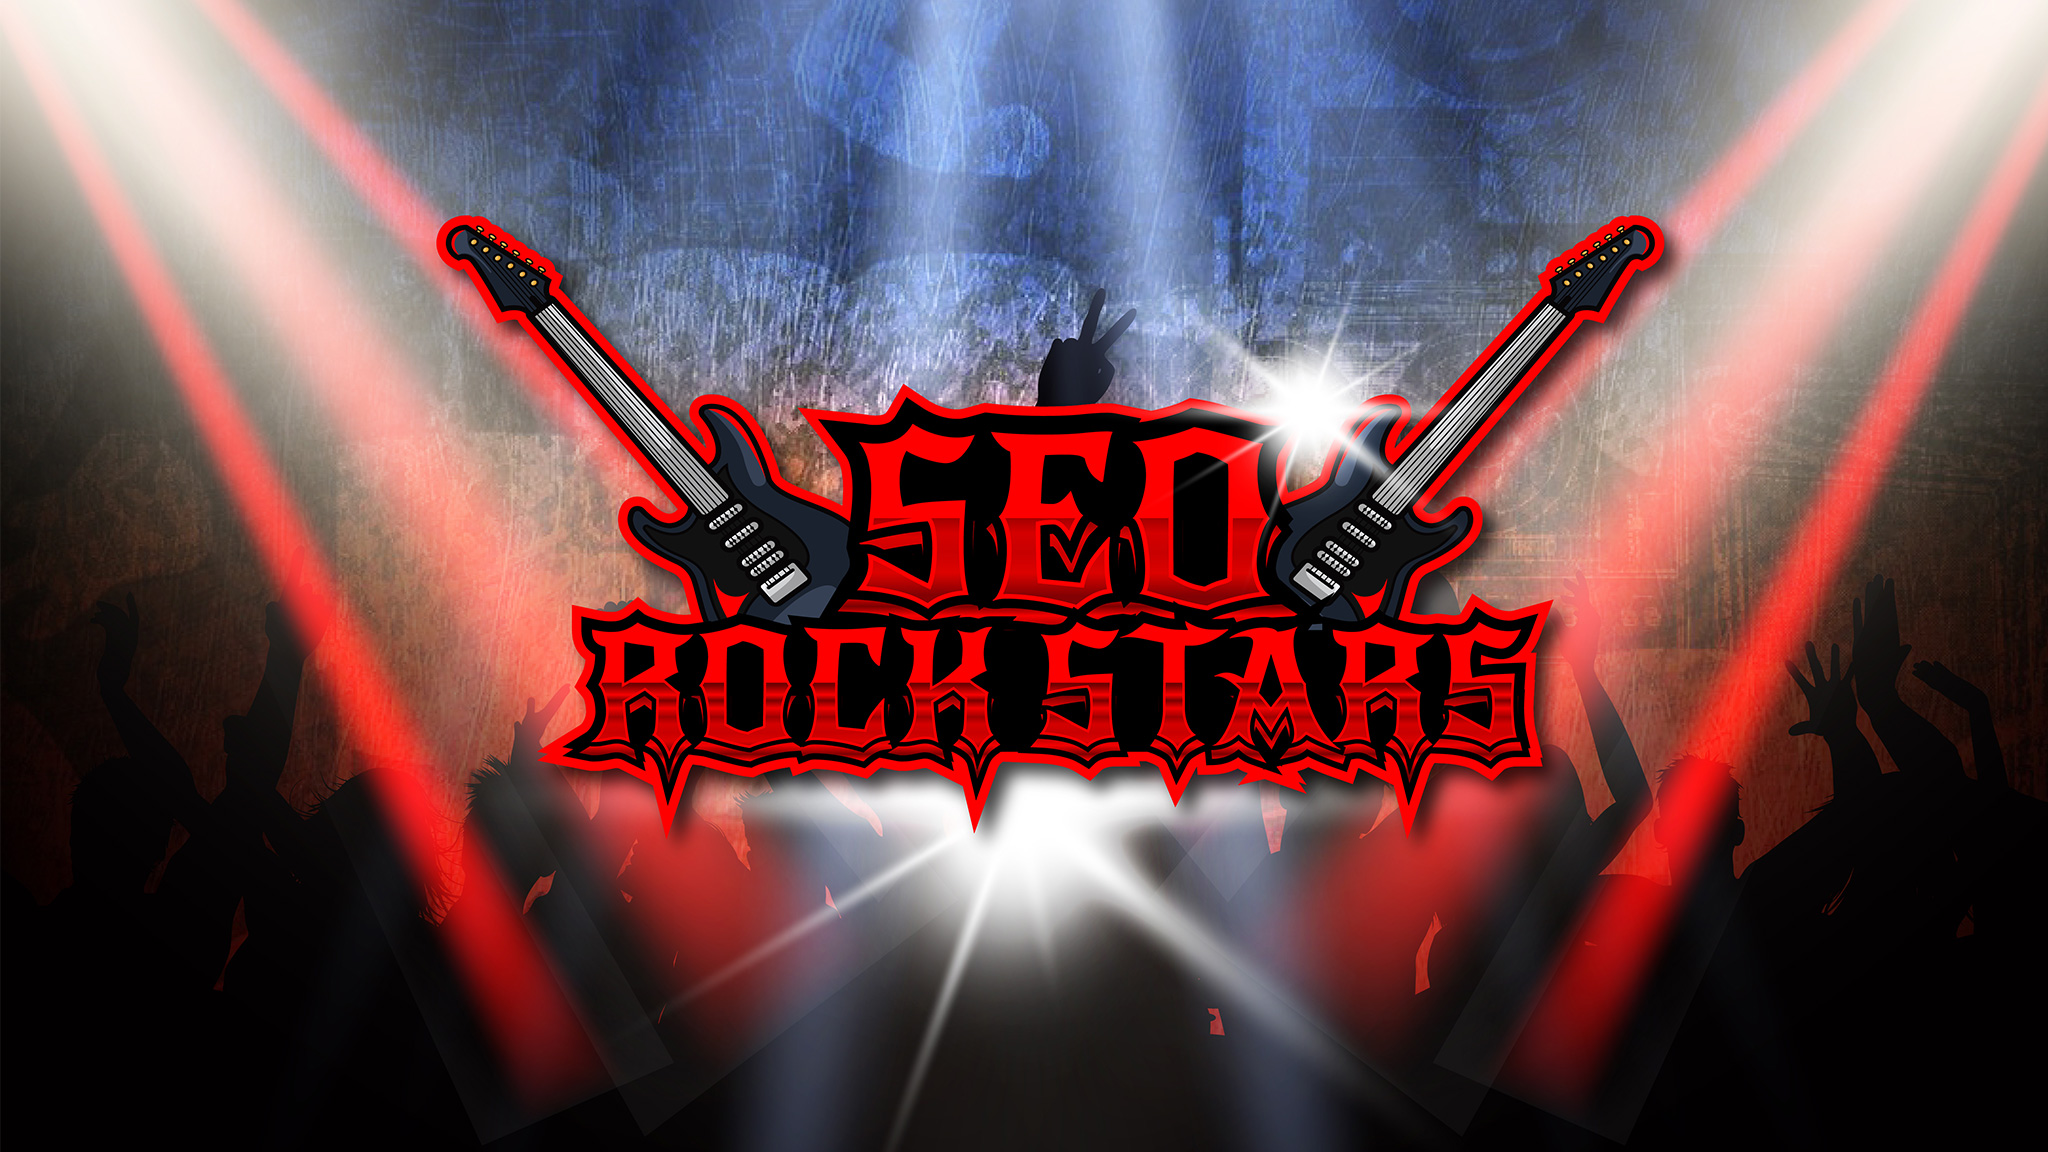 seo rockstars logo with background